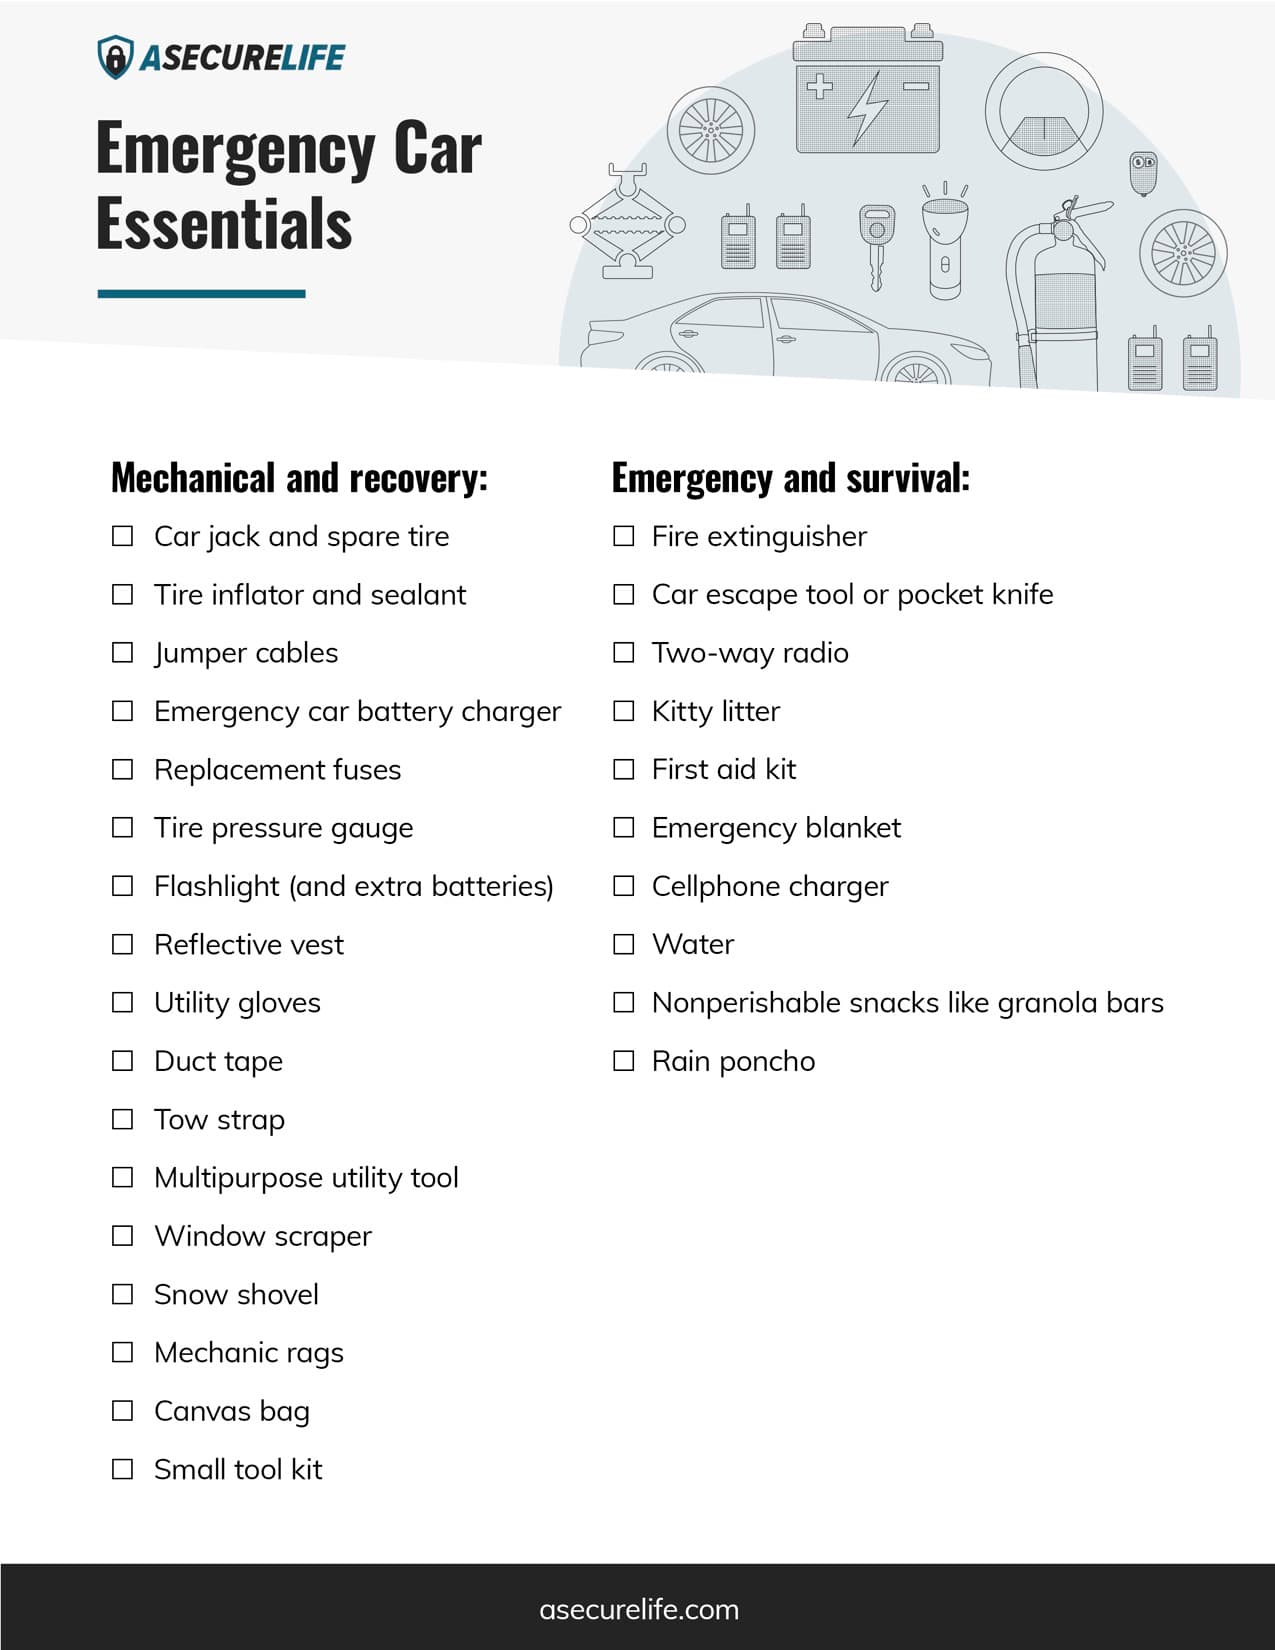 https://www.asecurelife.com/app/uploads/2019/11/emergency-car-essentials-checklist-image-1.jpg